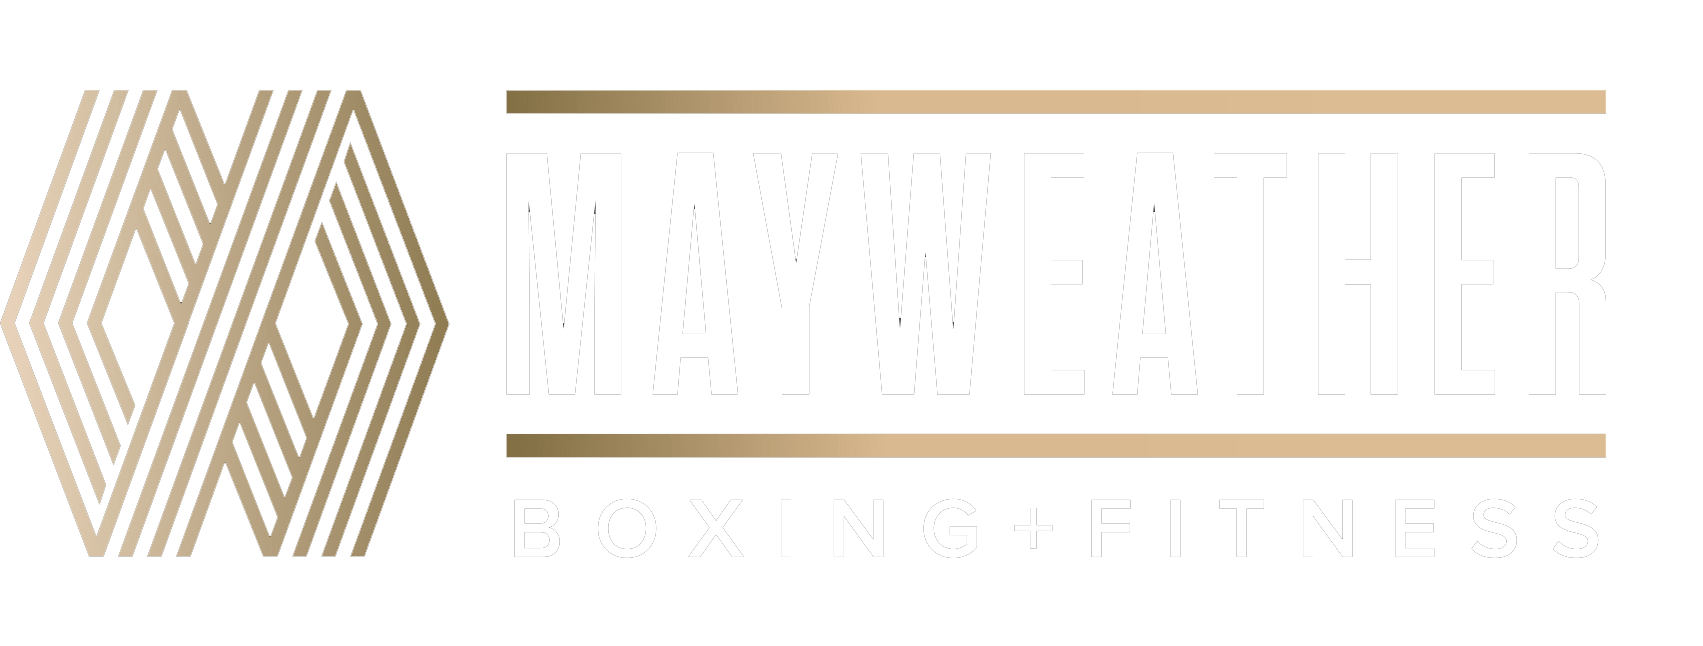 Mayweather Logo - logo - Cerebral-Overload